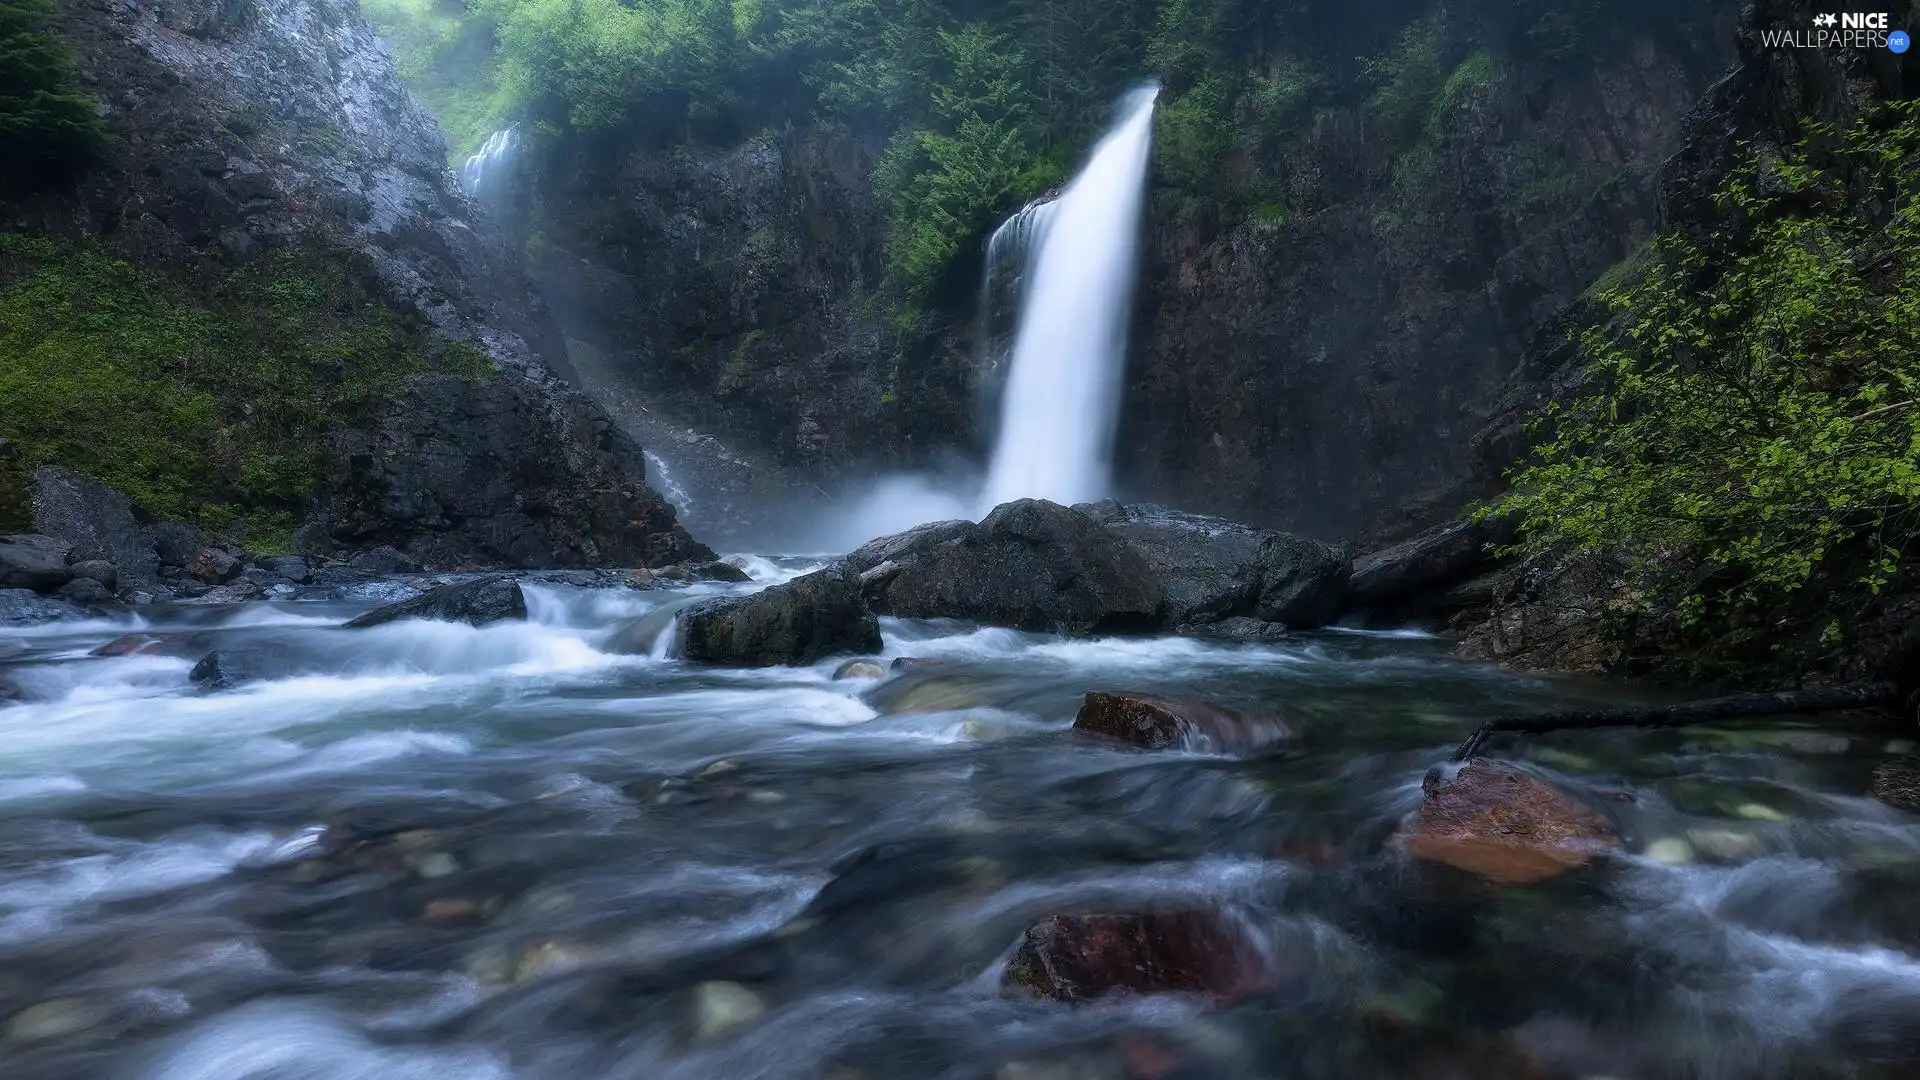 River, waterfall, Stones, Twigs, forest, rocks